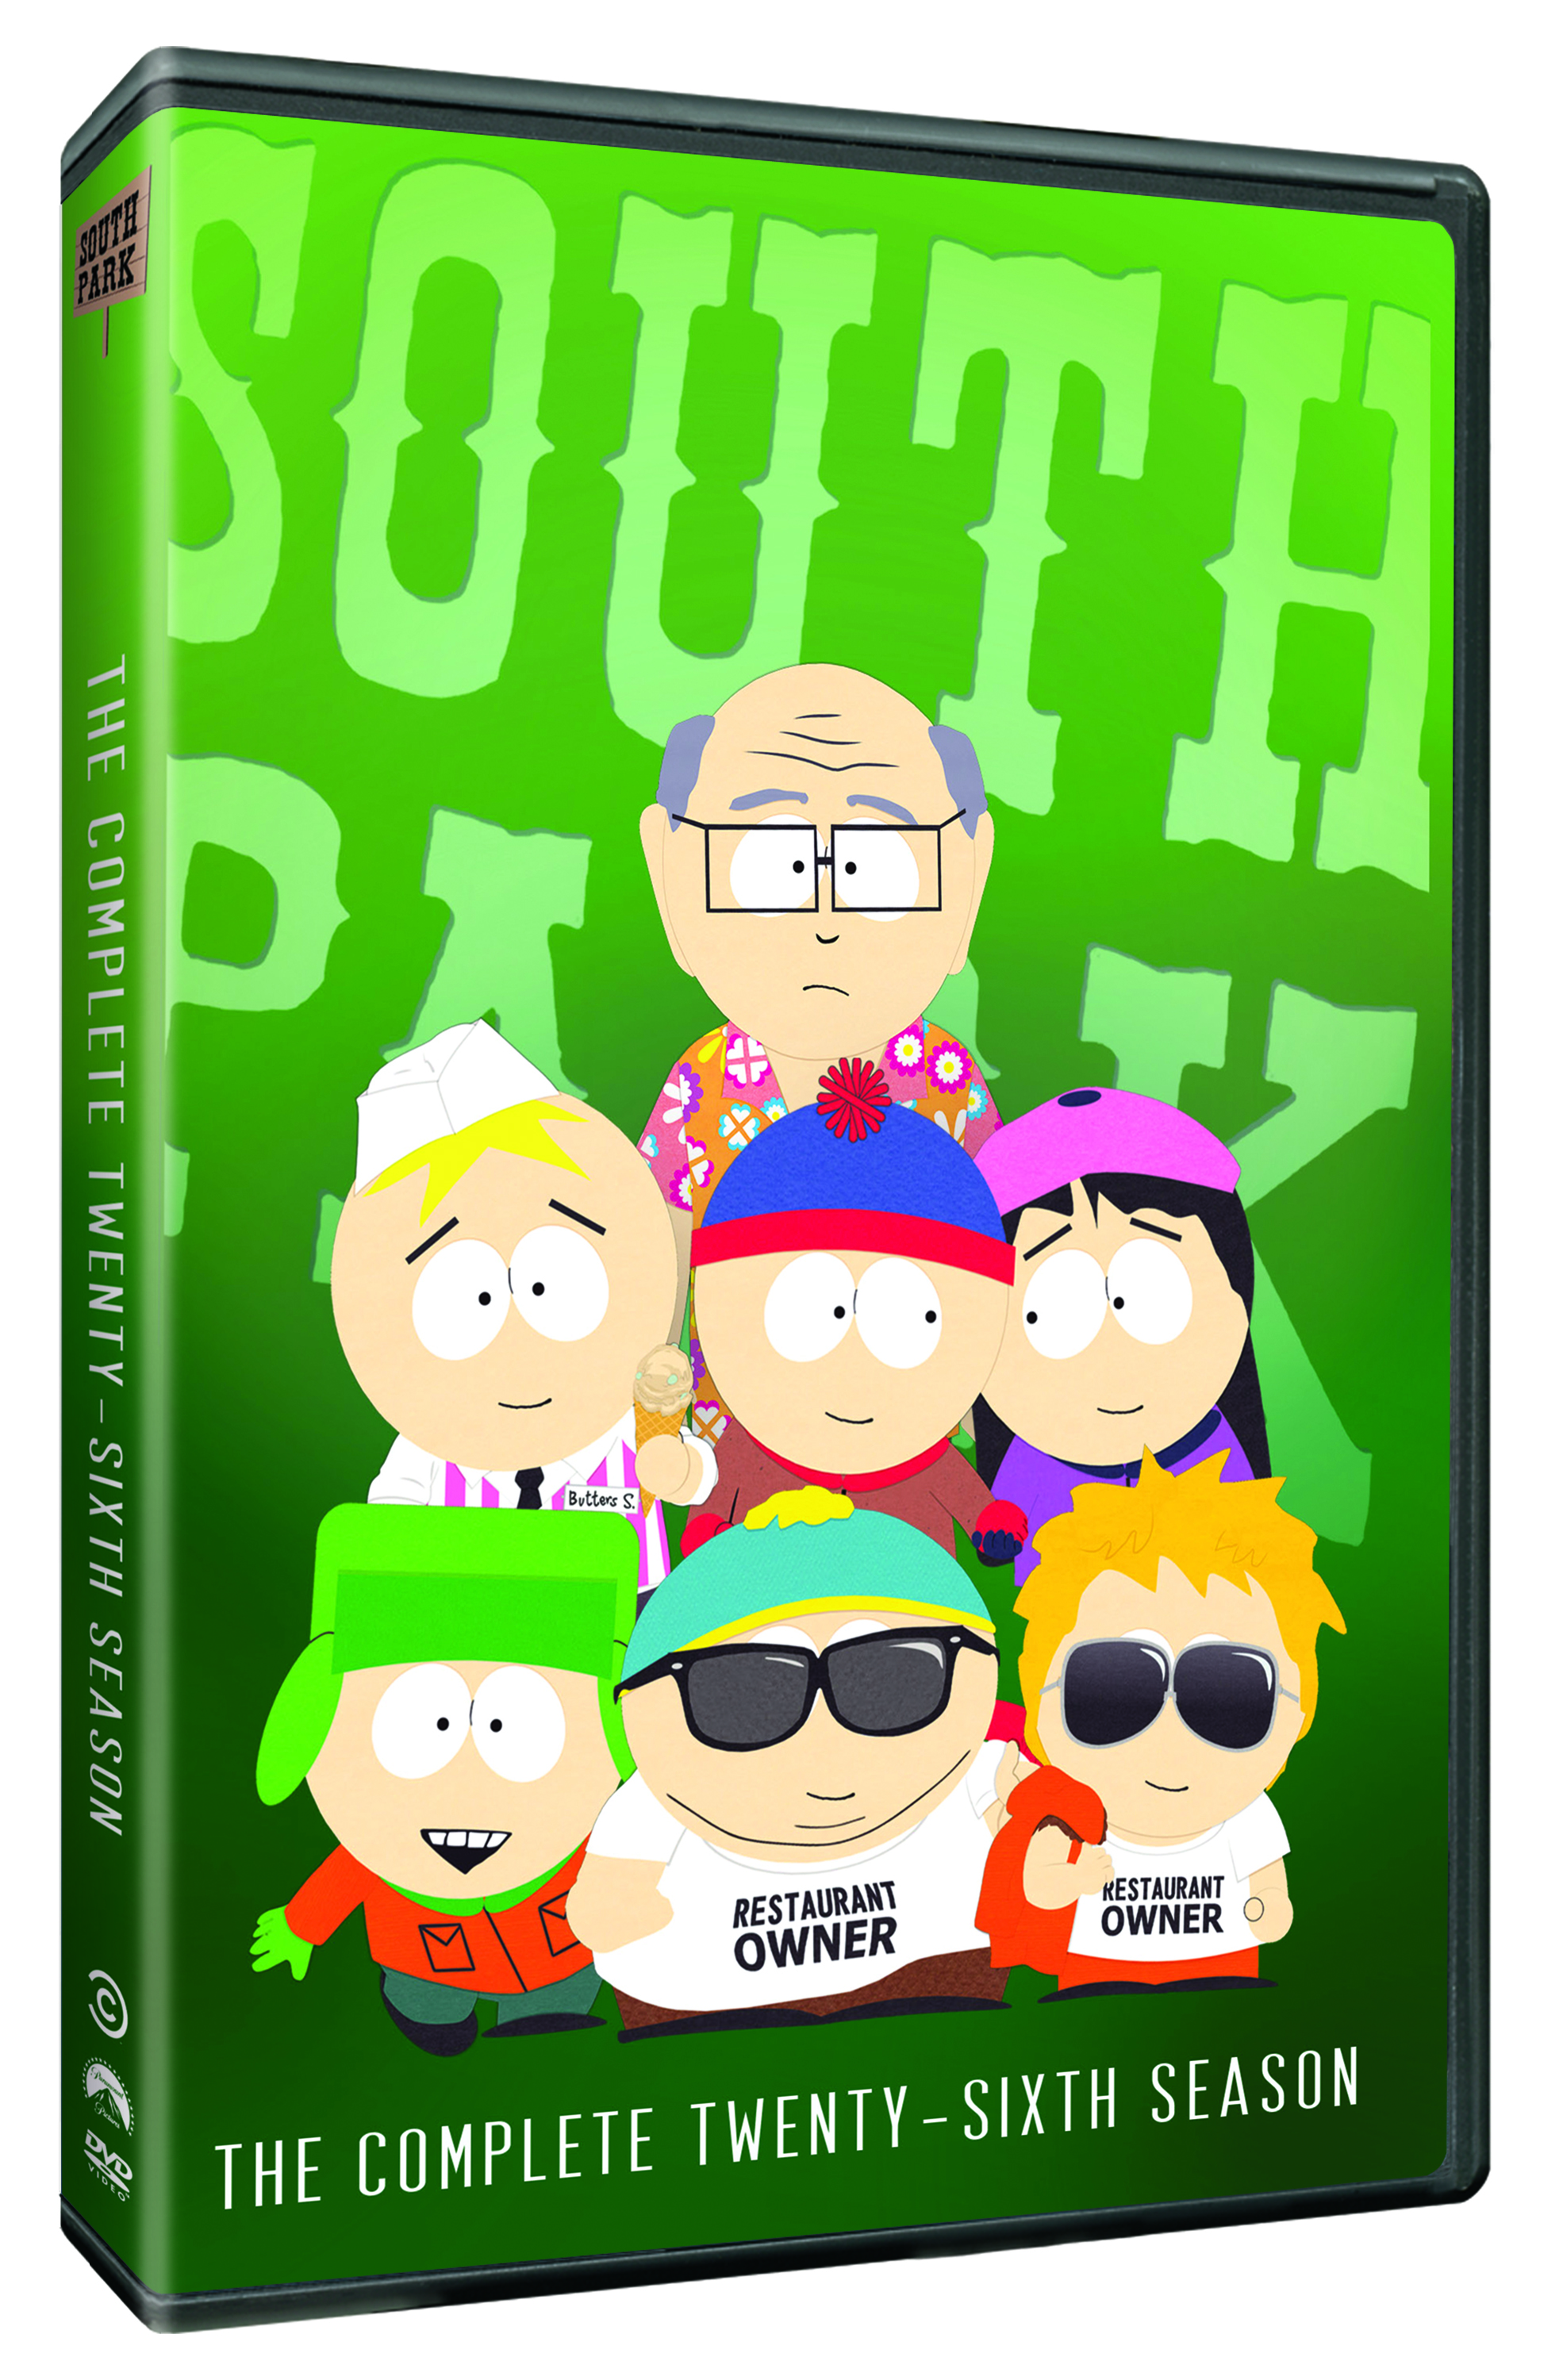 South Park: The Complete Twenty-Sixth Season DVD cover (Paramount Home Entertainment)